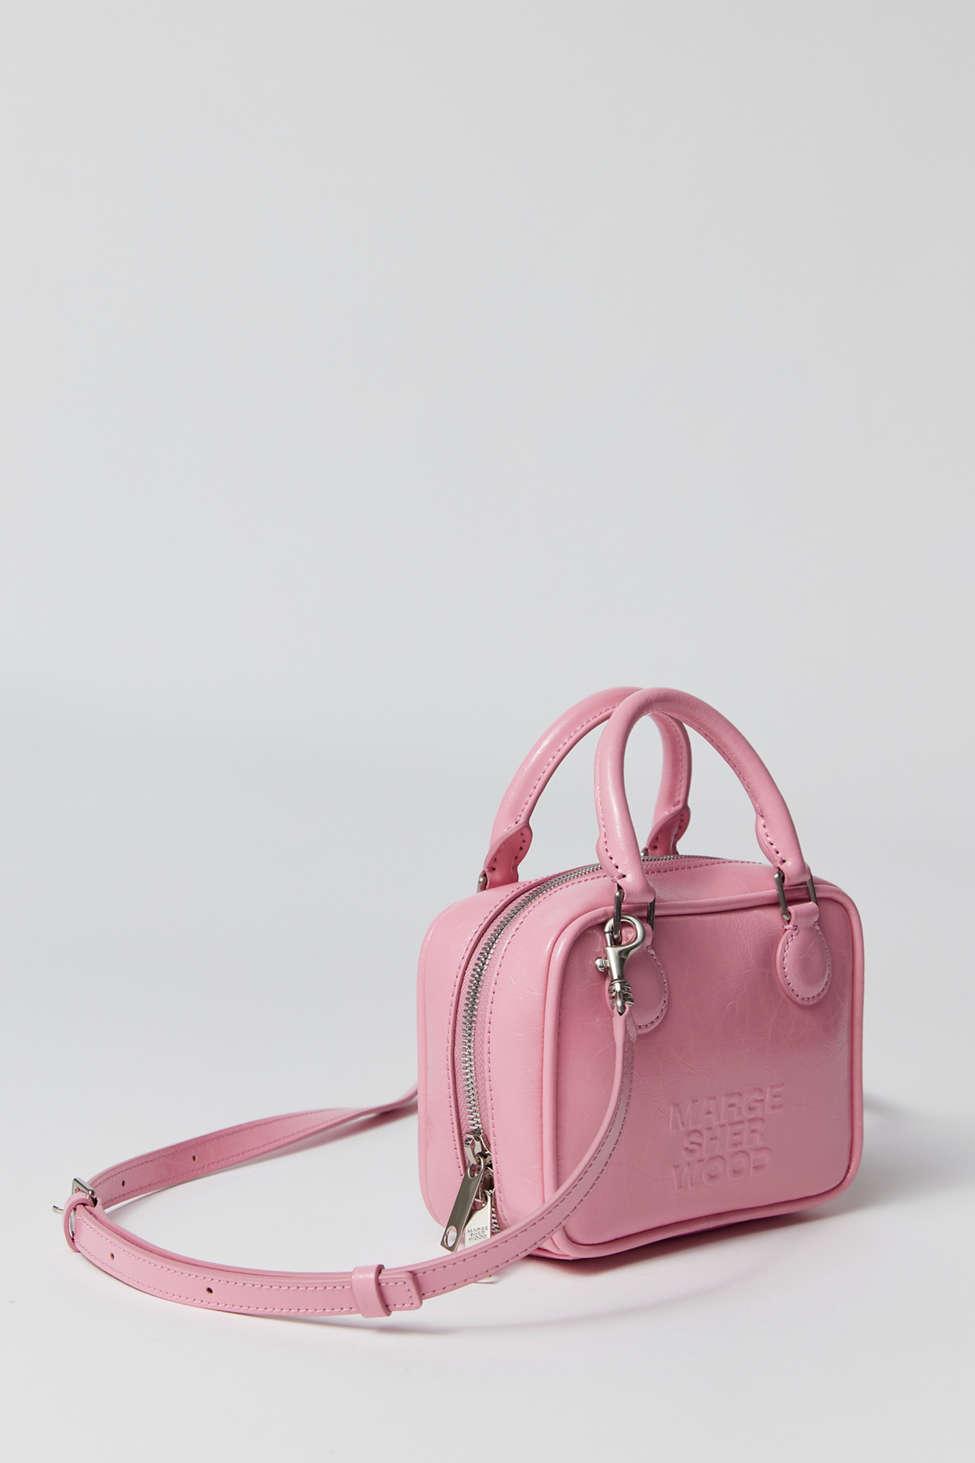 Marge Sherwood Piping Mini Bag in Pink